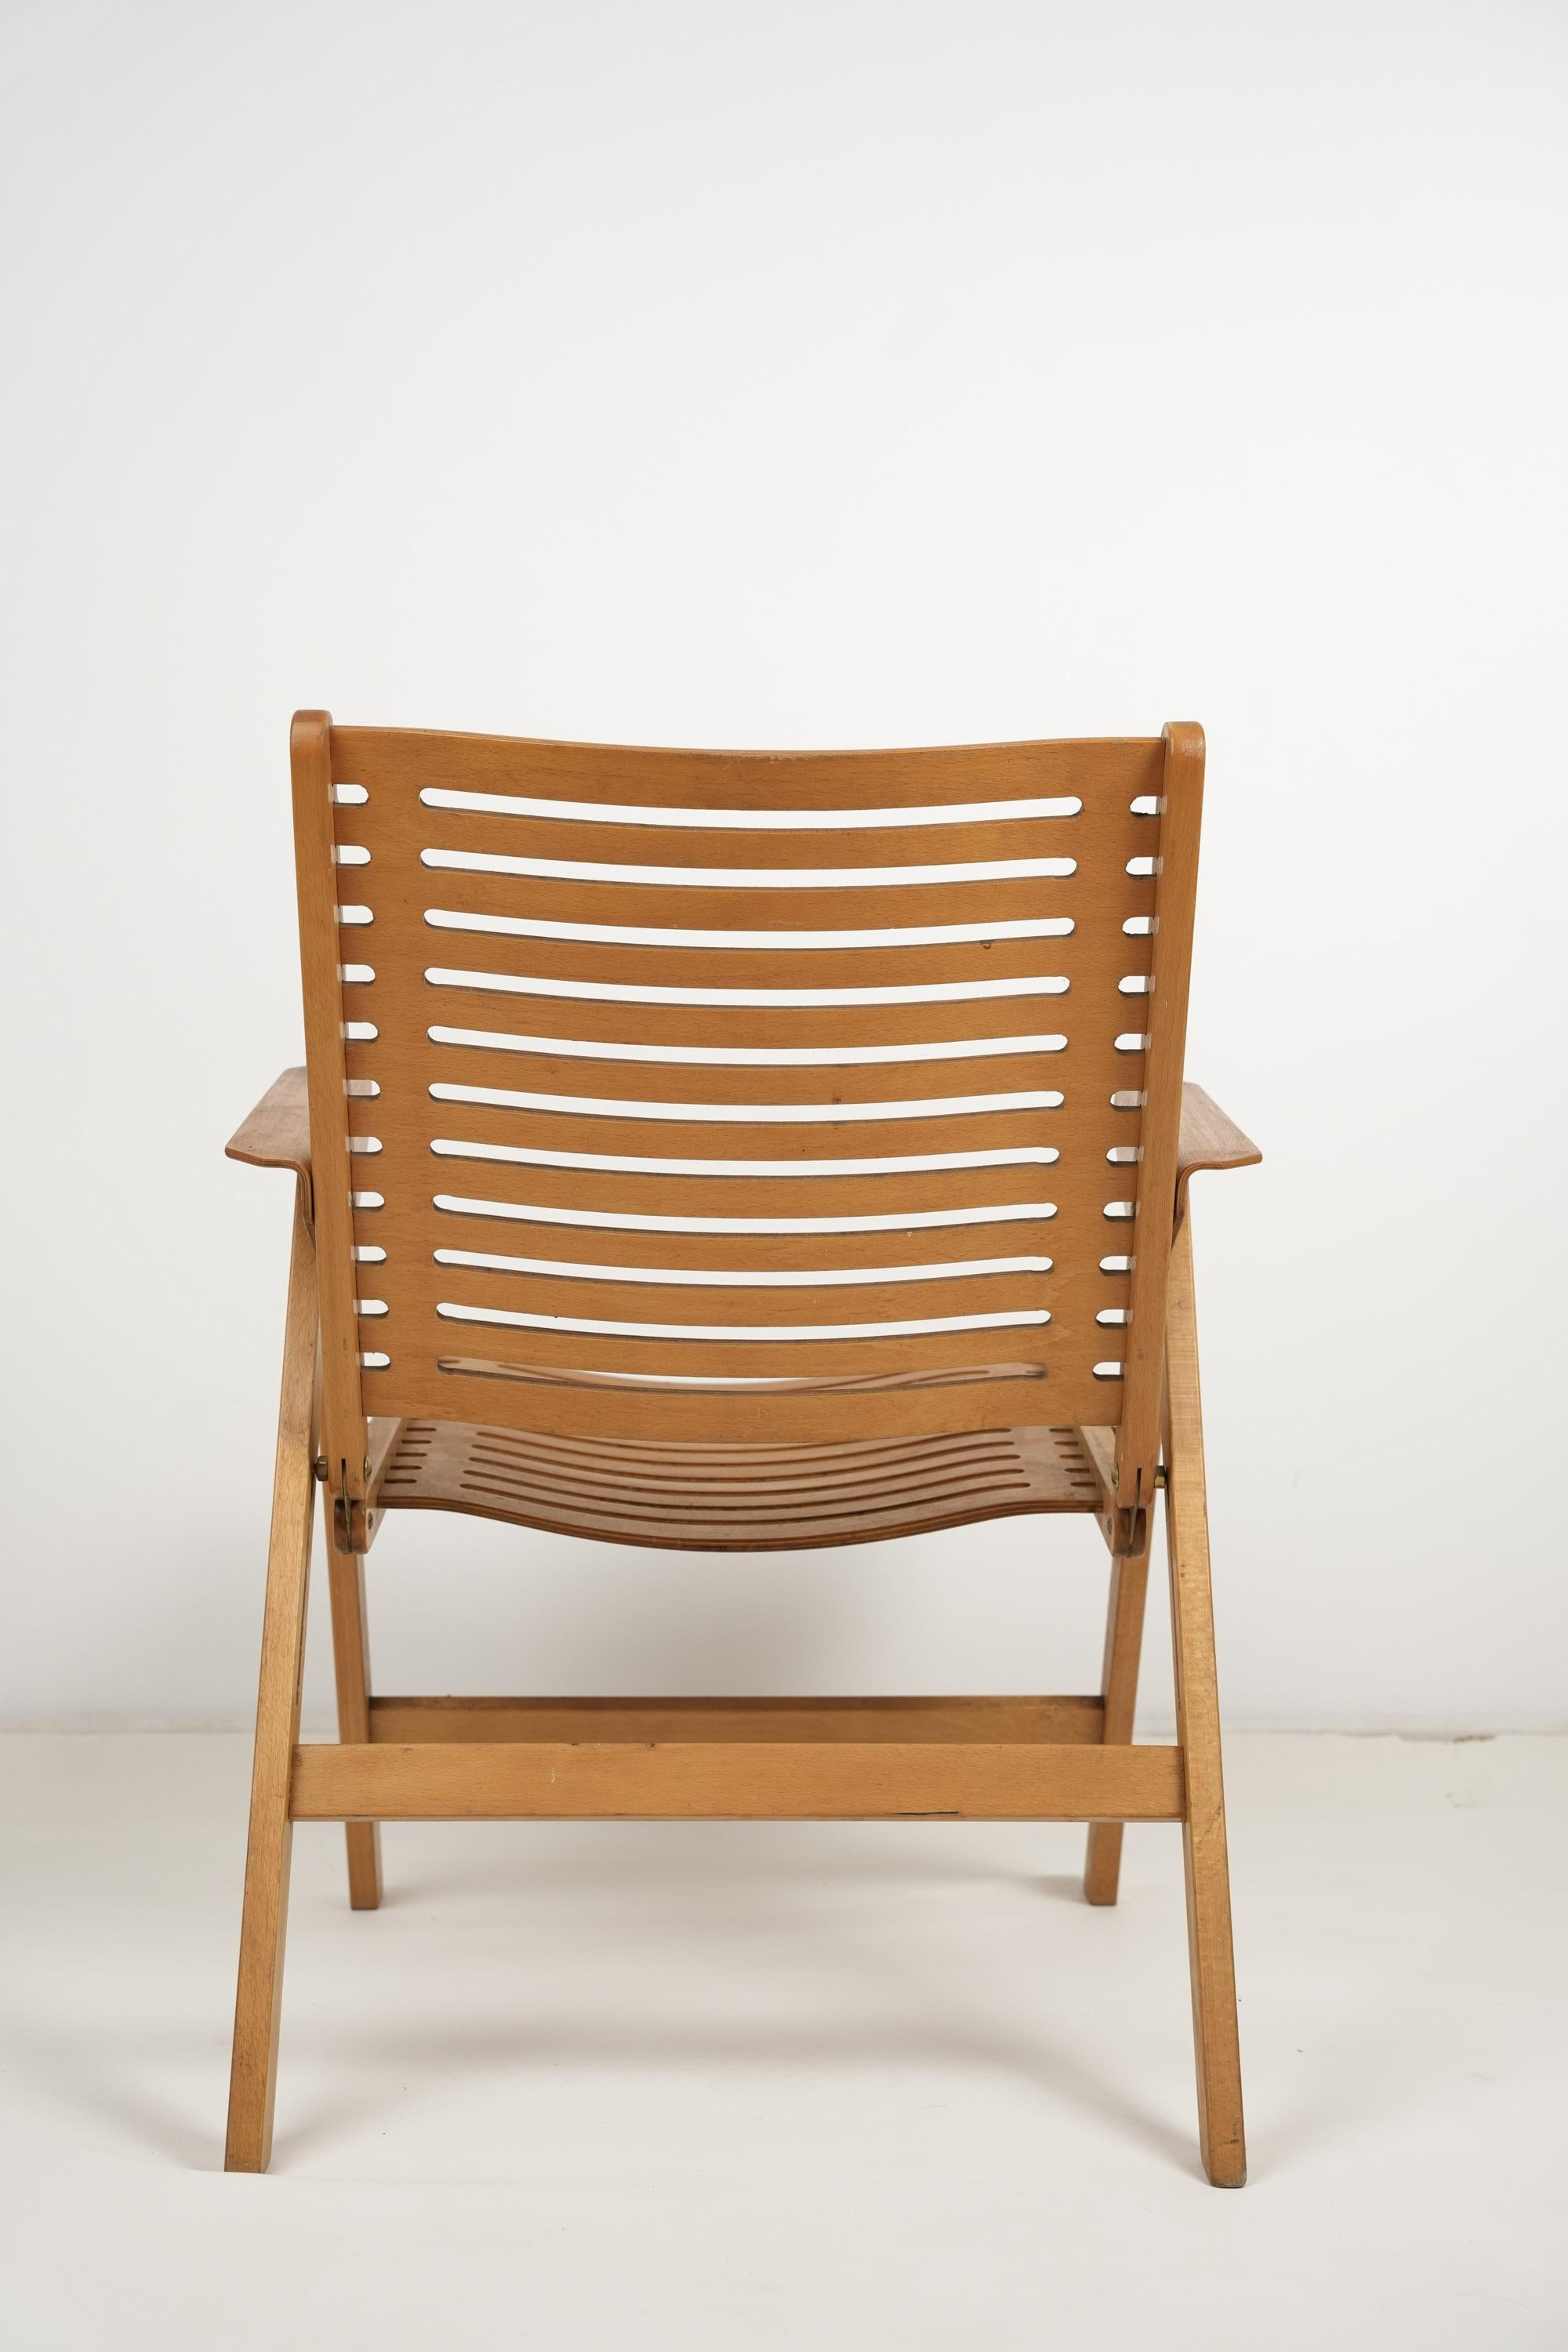 Slovenian Folding Chair REX By Niko Kralj for Stol Kamnik Yugoslavia 1950s For Sale